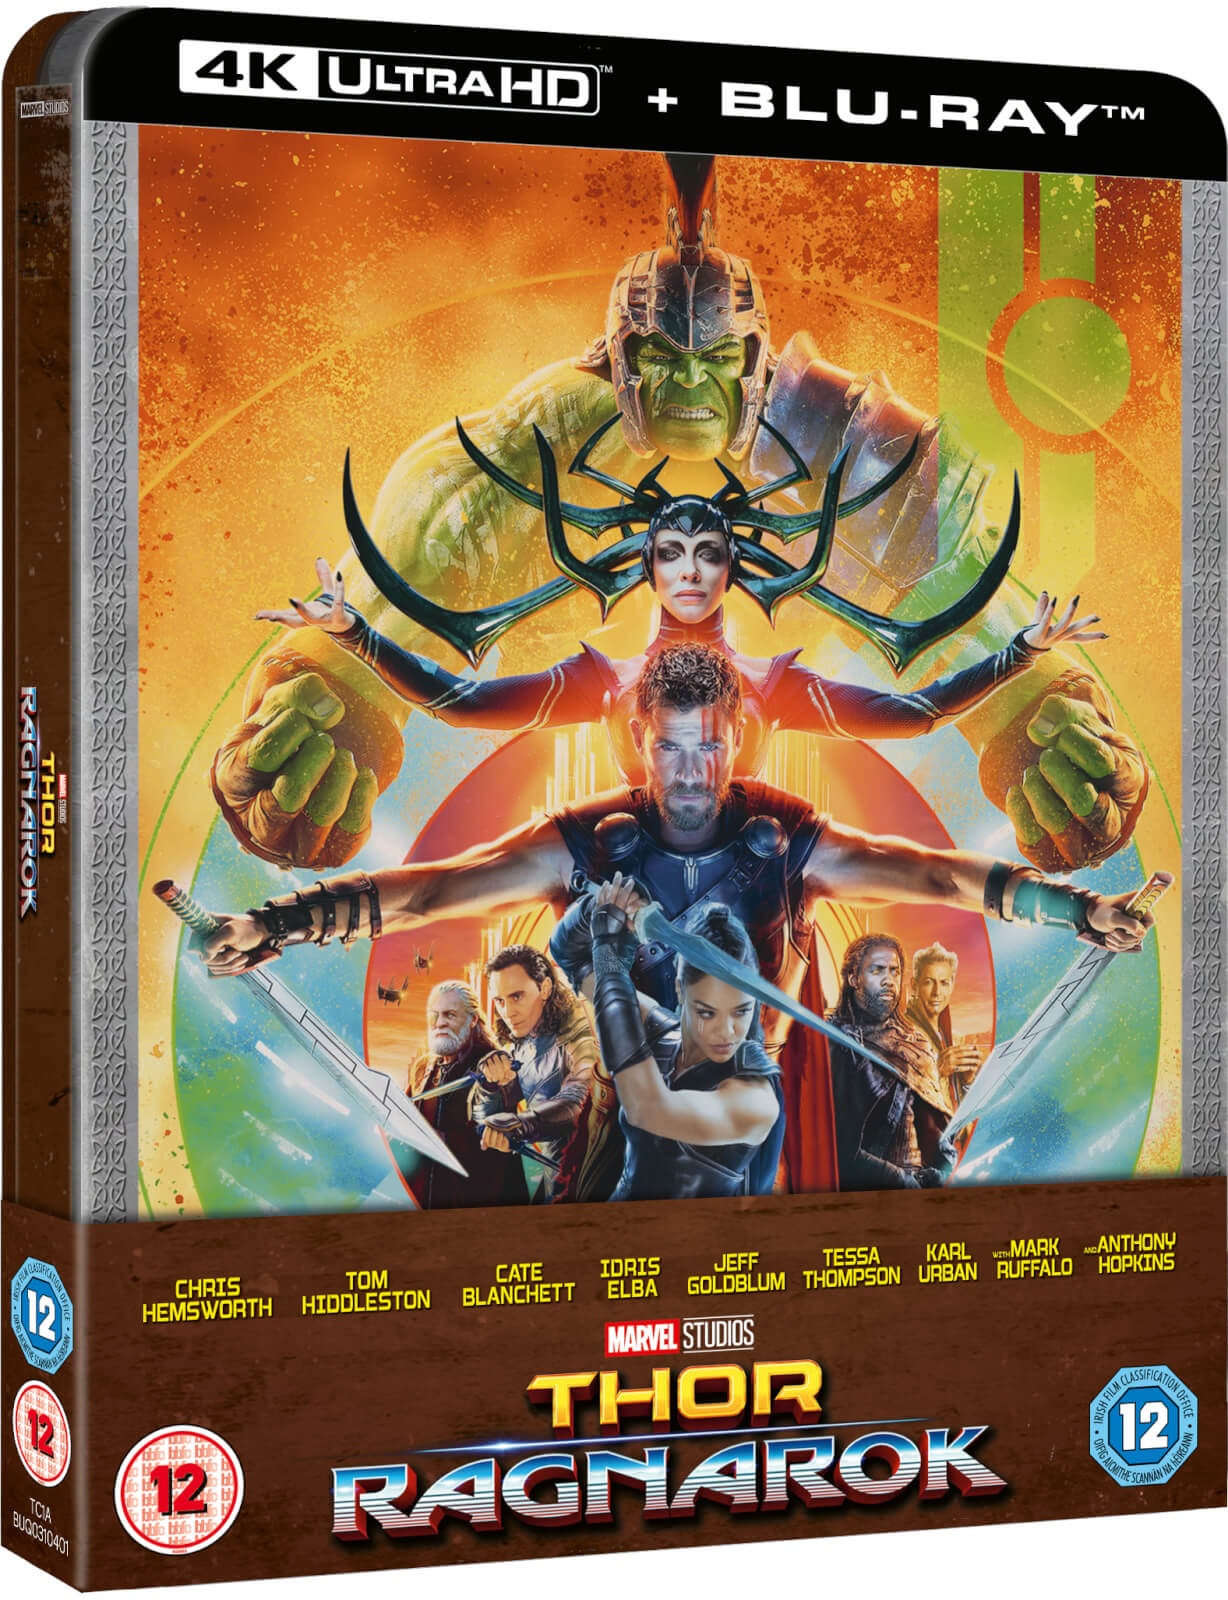 Thor Ragnarok Release Date Germany